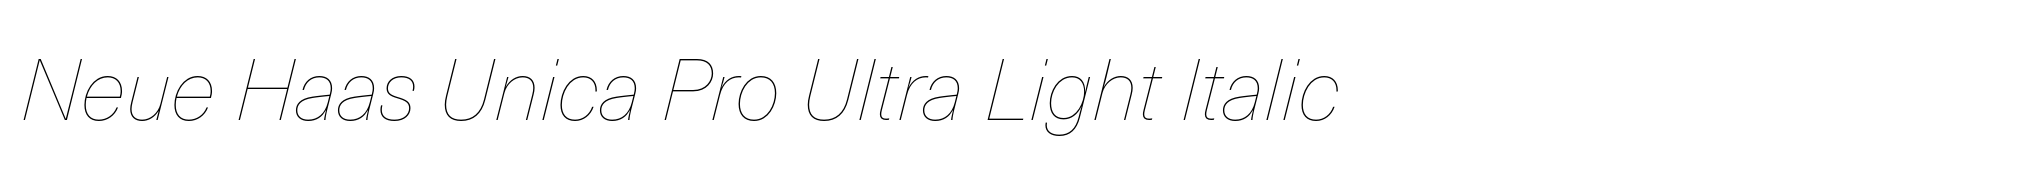 Neue Haas Unica Pro Ultra Light Italic image